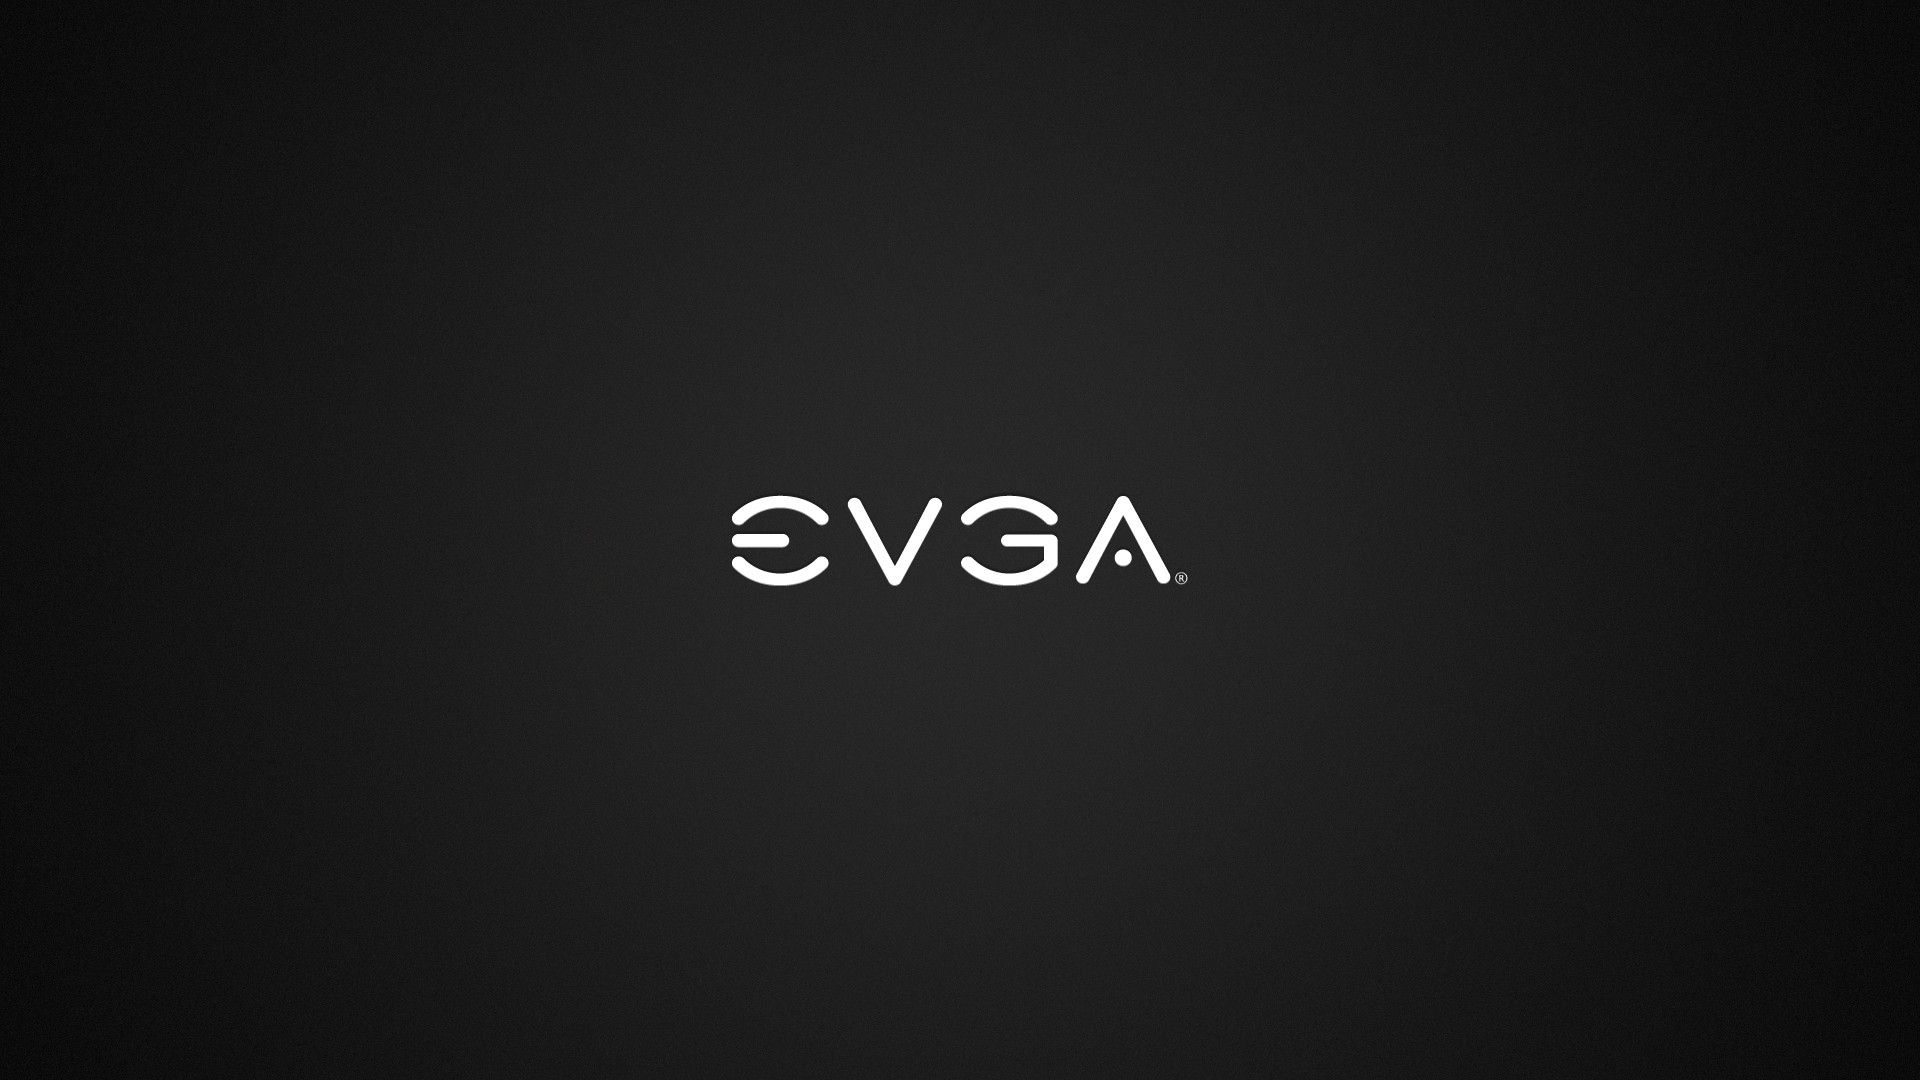 Evga Wallpapers - Wallpaper Cave